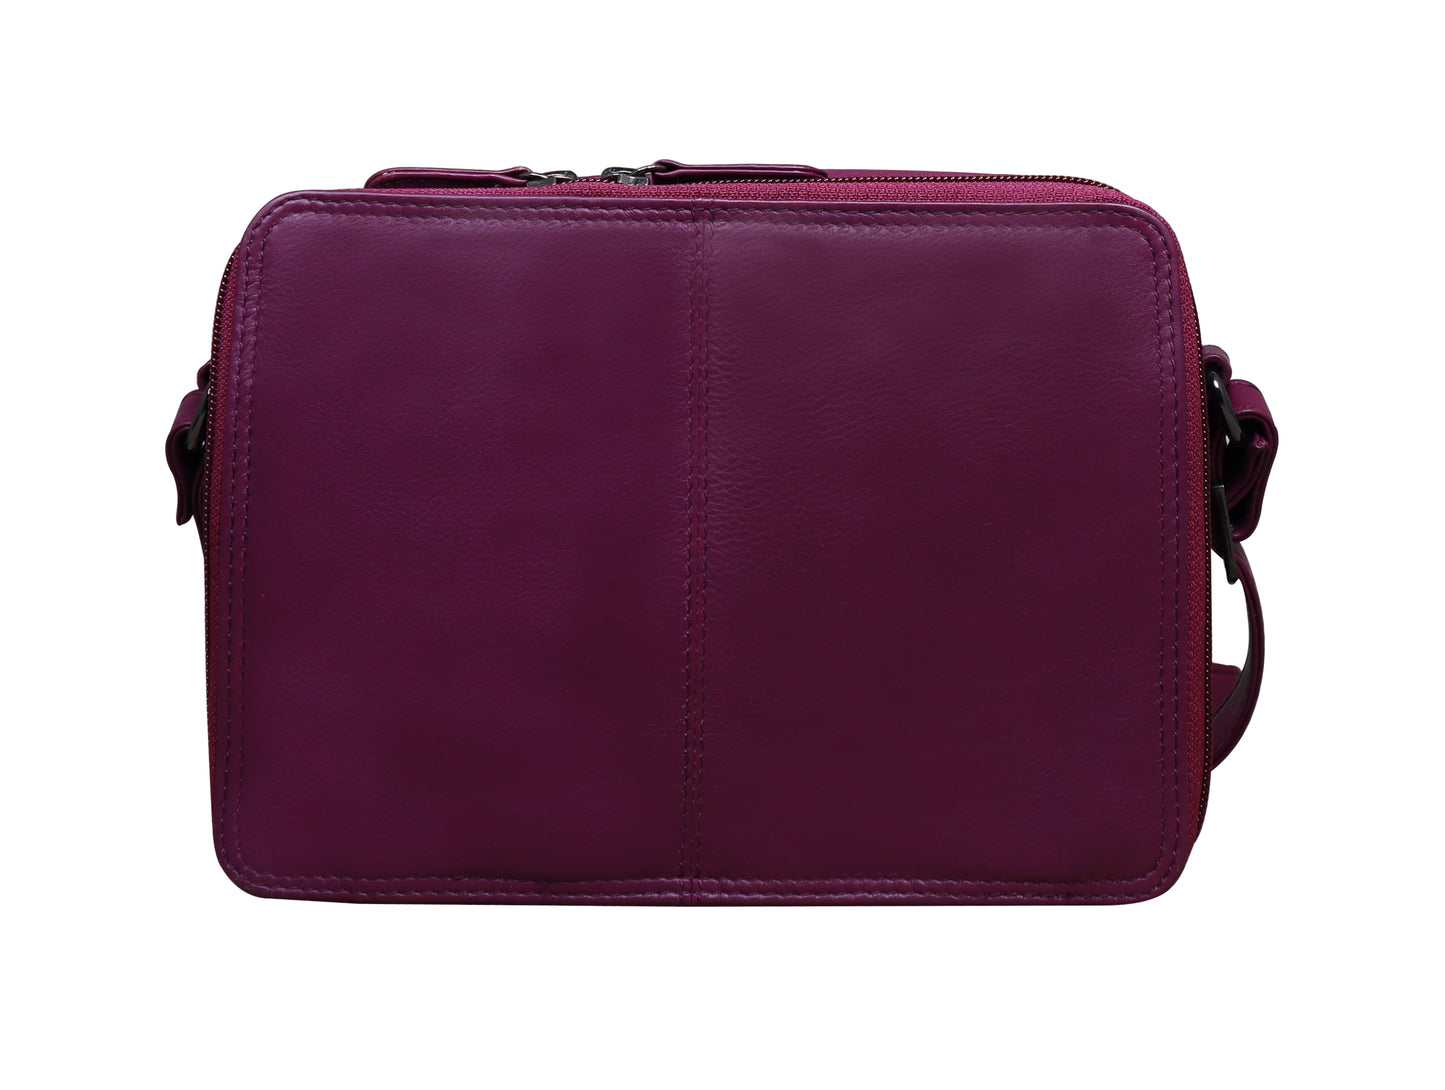 Calfnero Genuine Leather Women's Sling Bag (80056-Brodo)